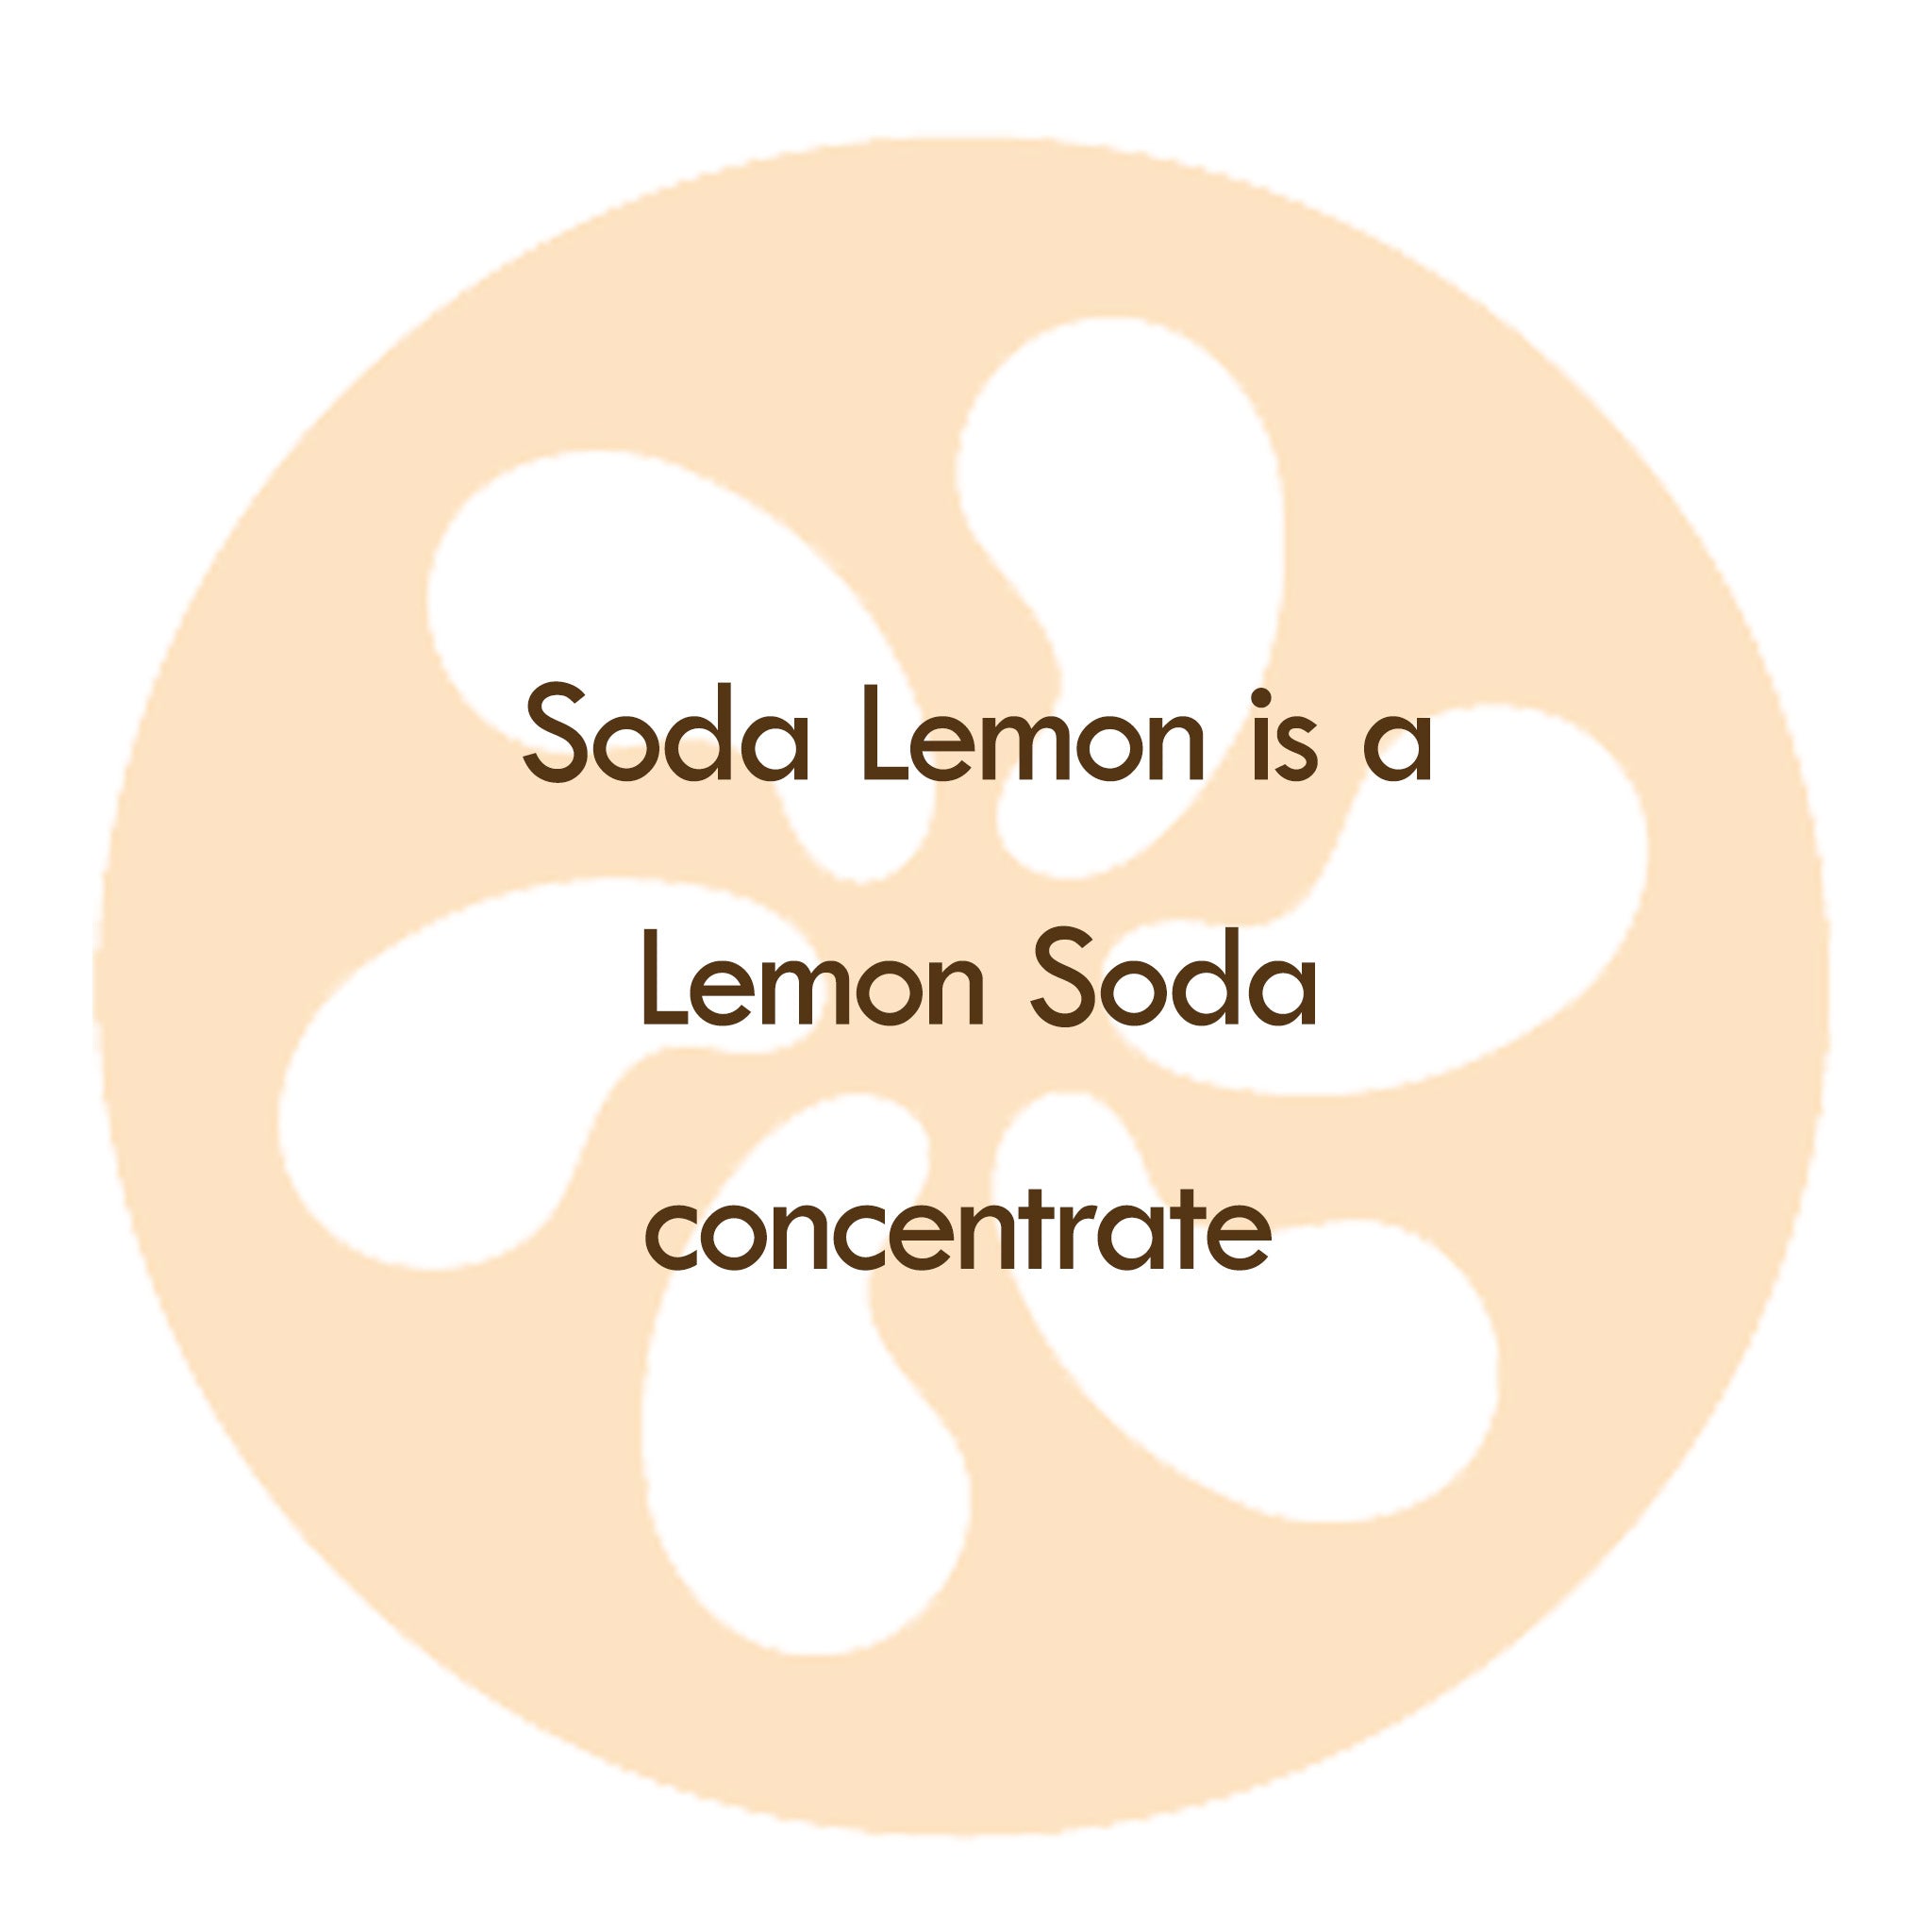 Our Soda Lemon Mocktail is a concentrate of Lemon Soda.